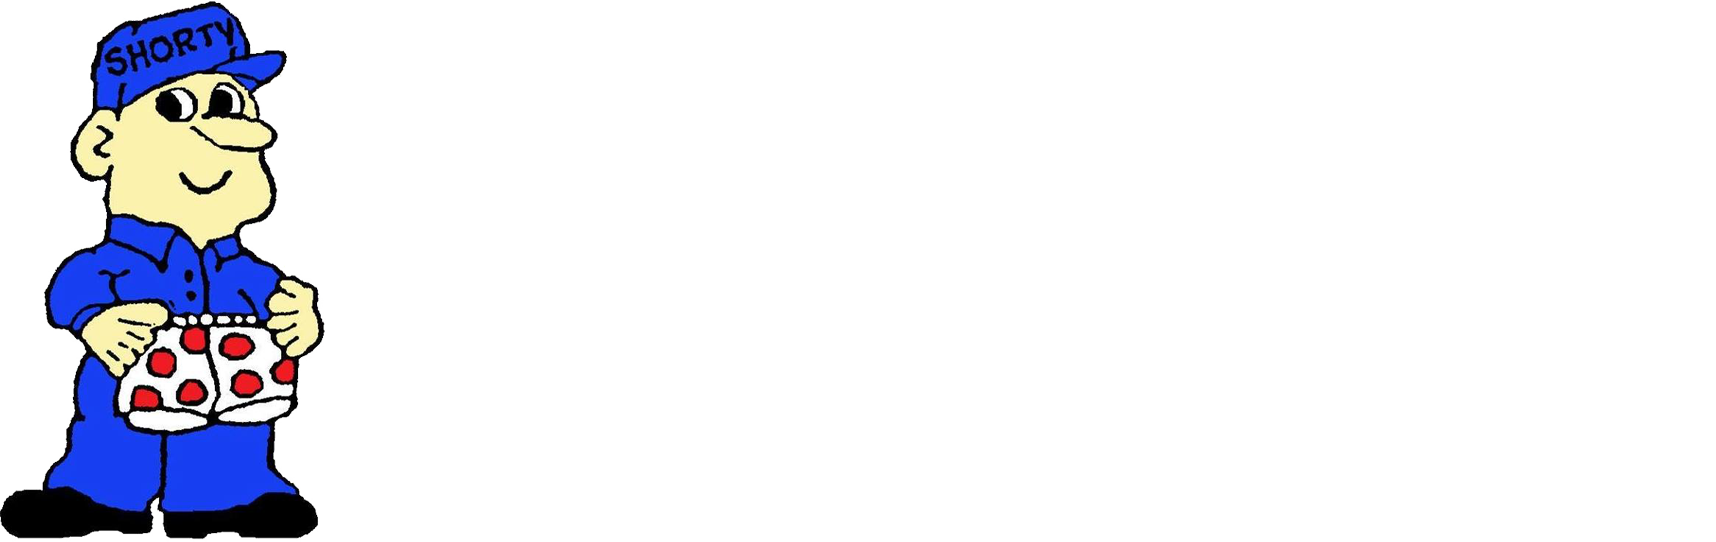 Murray Auto Electric & Radio Communications Logo